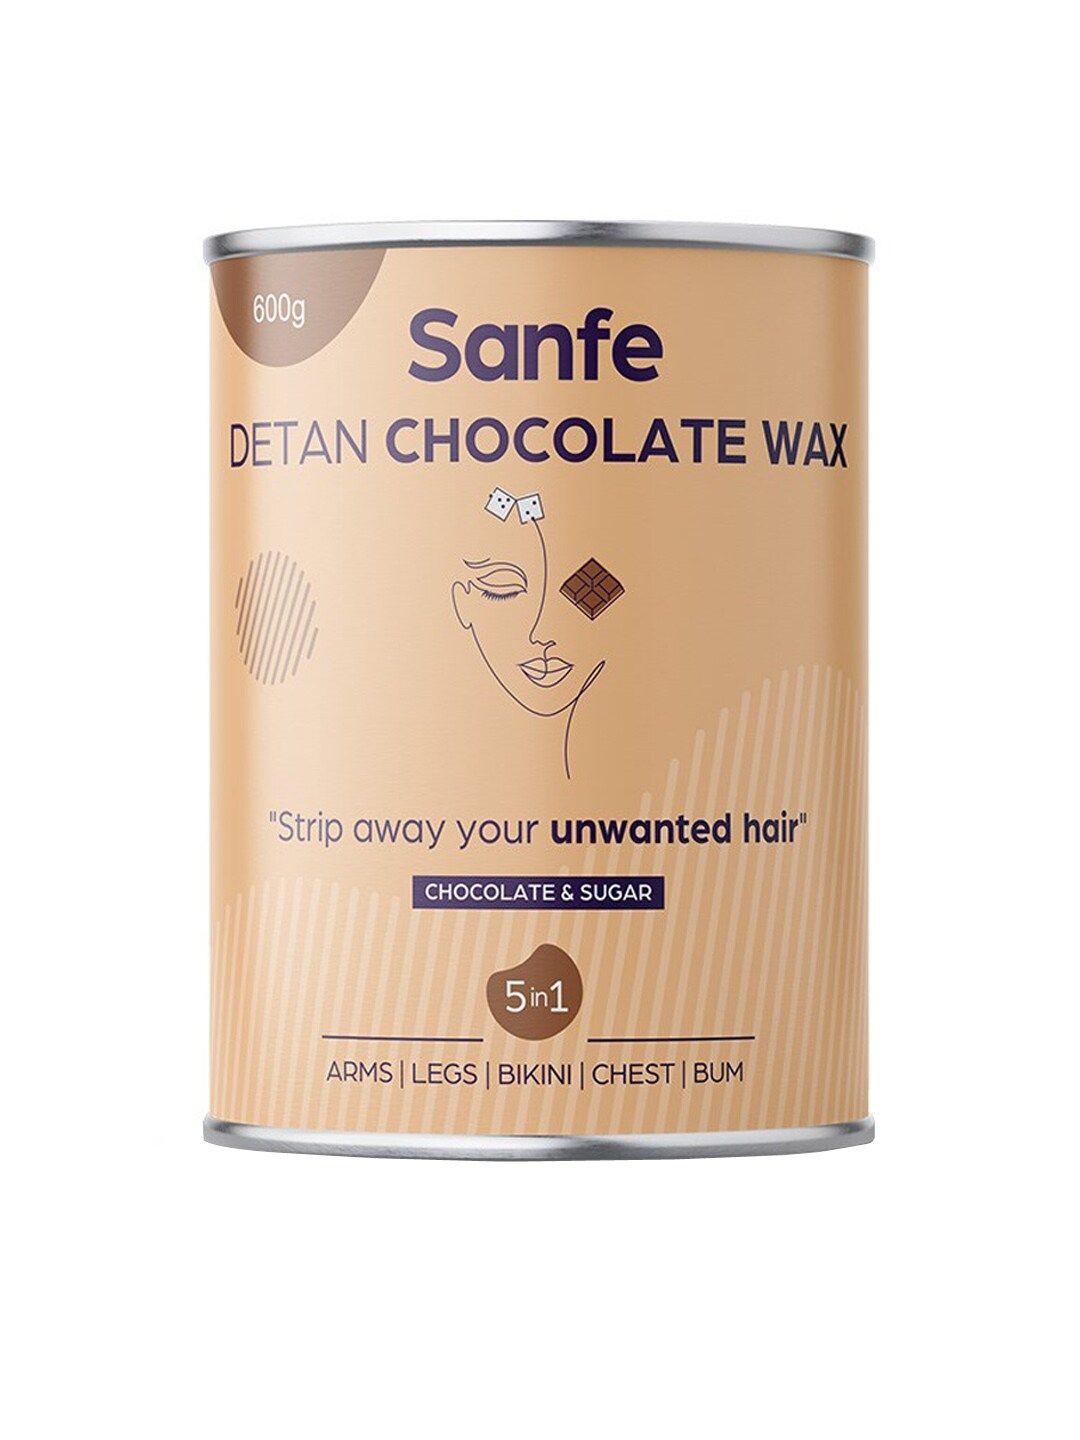 sanfe detan chocolate wax for smooth hair removal - 600gm